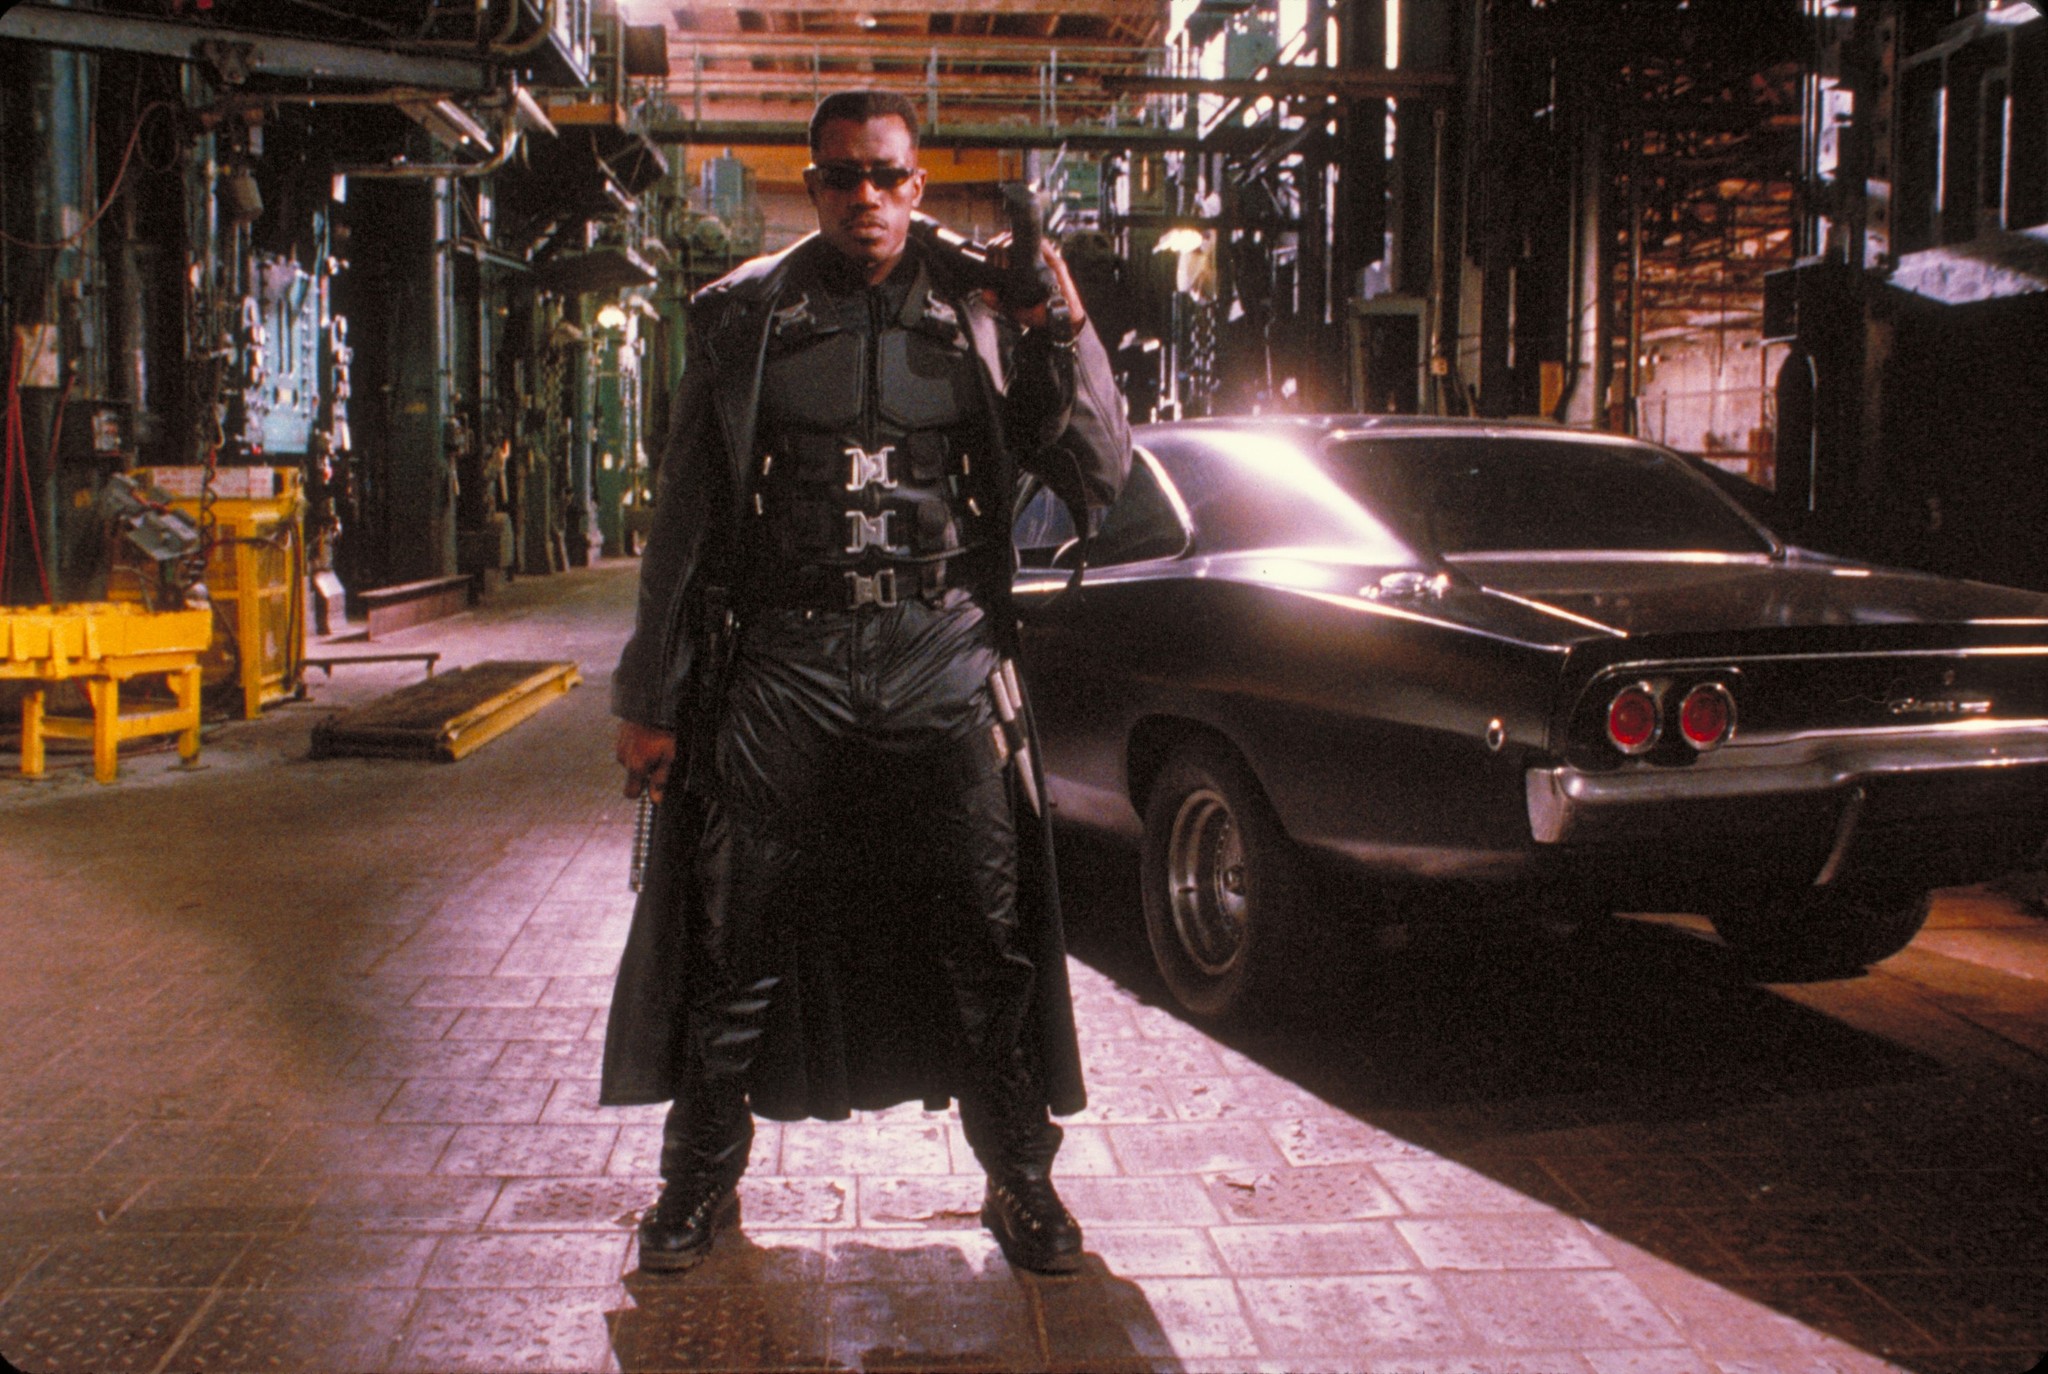 15. Blade $204.8 million. Number of films: 3. First film: Blade (1998) $70.1 million. Highest-grossing film: Blade II (2002) $82.3 million.